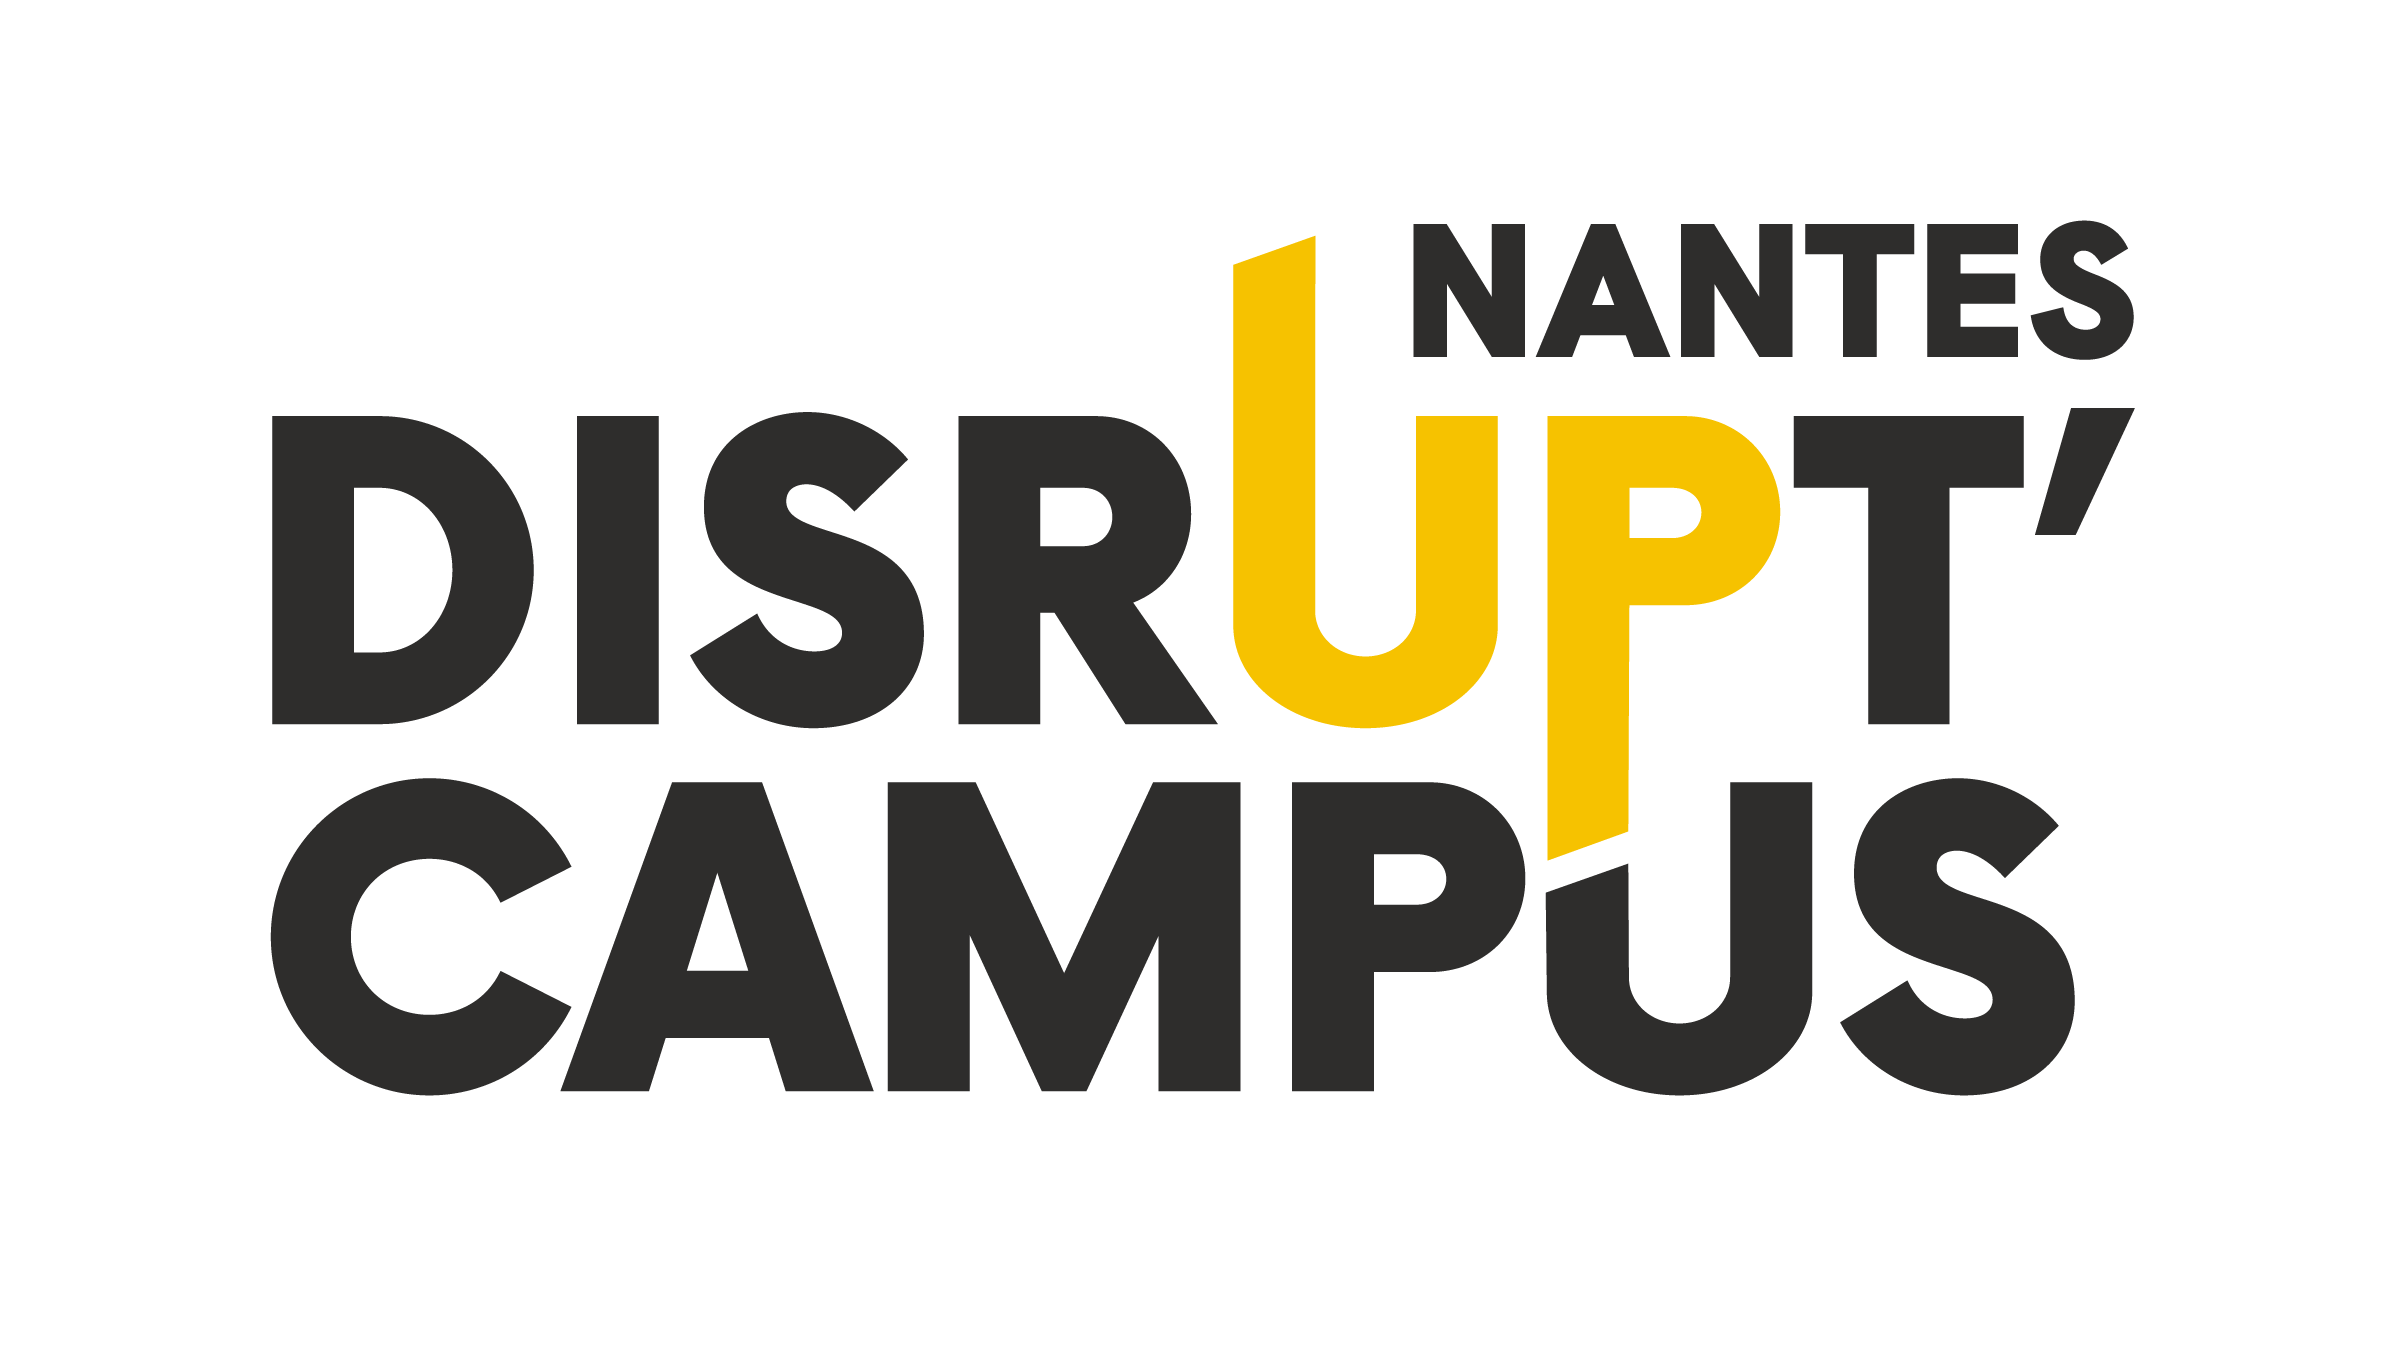 Disrupt' Campus etudiants